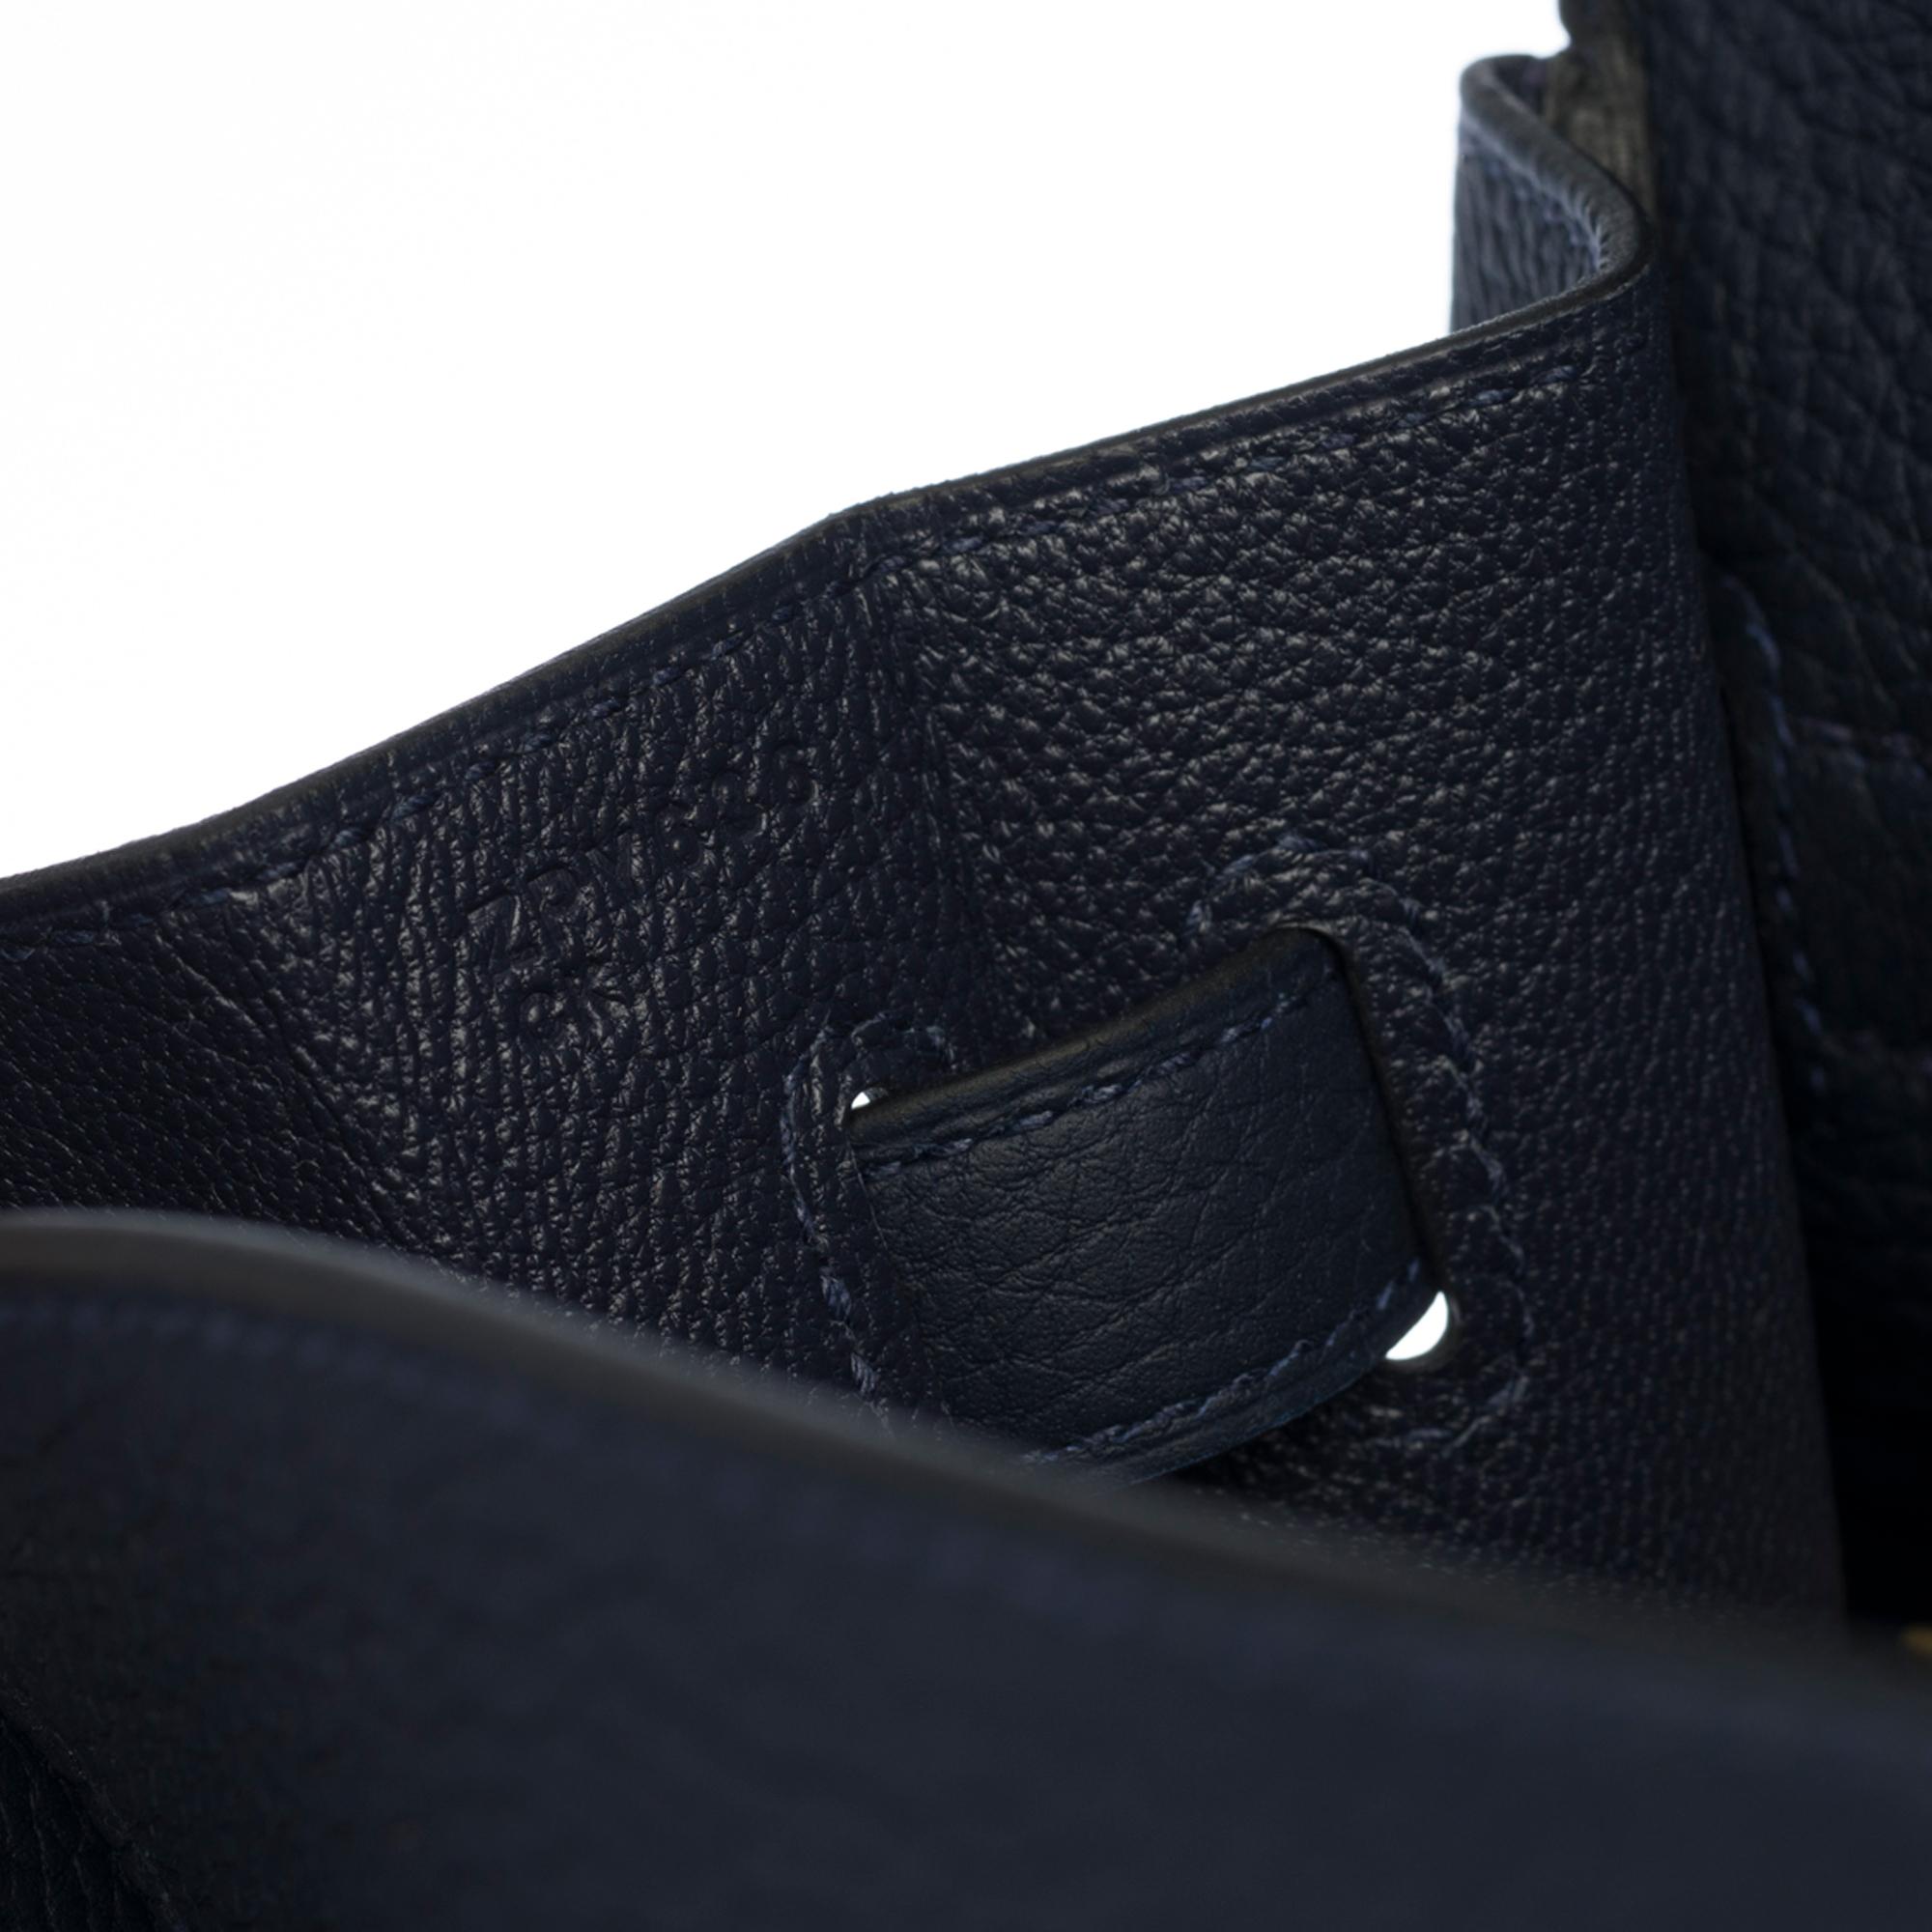 NEW- Hermès Kelly 32cm handbag with strap in bleu nuit togo leather, GHW 2